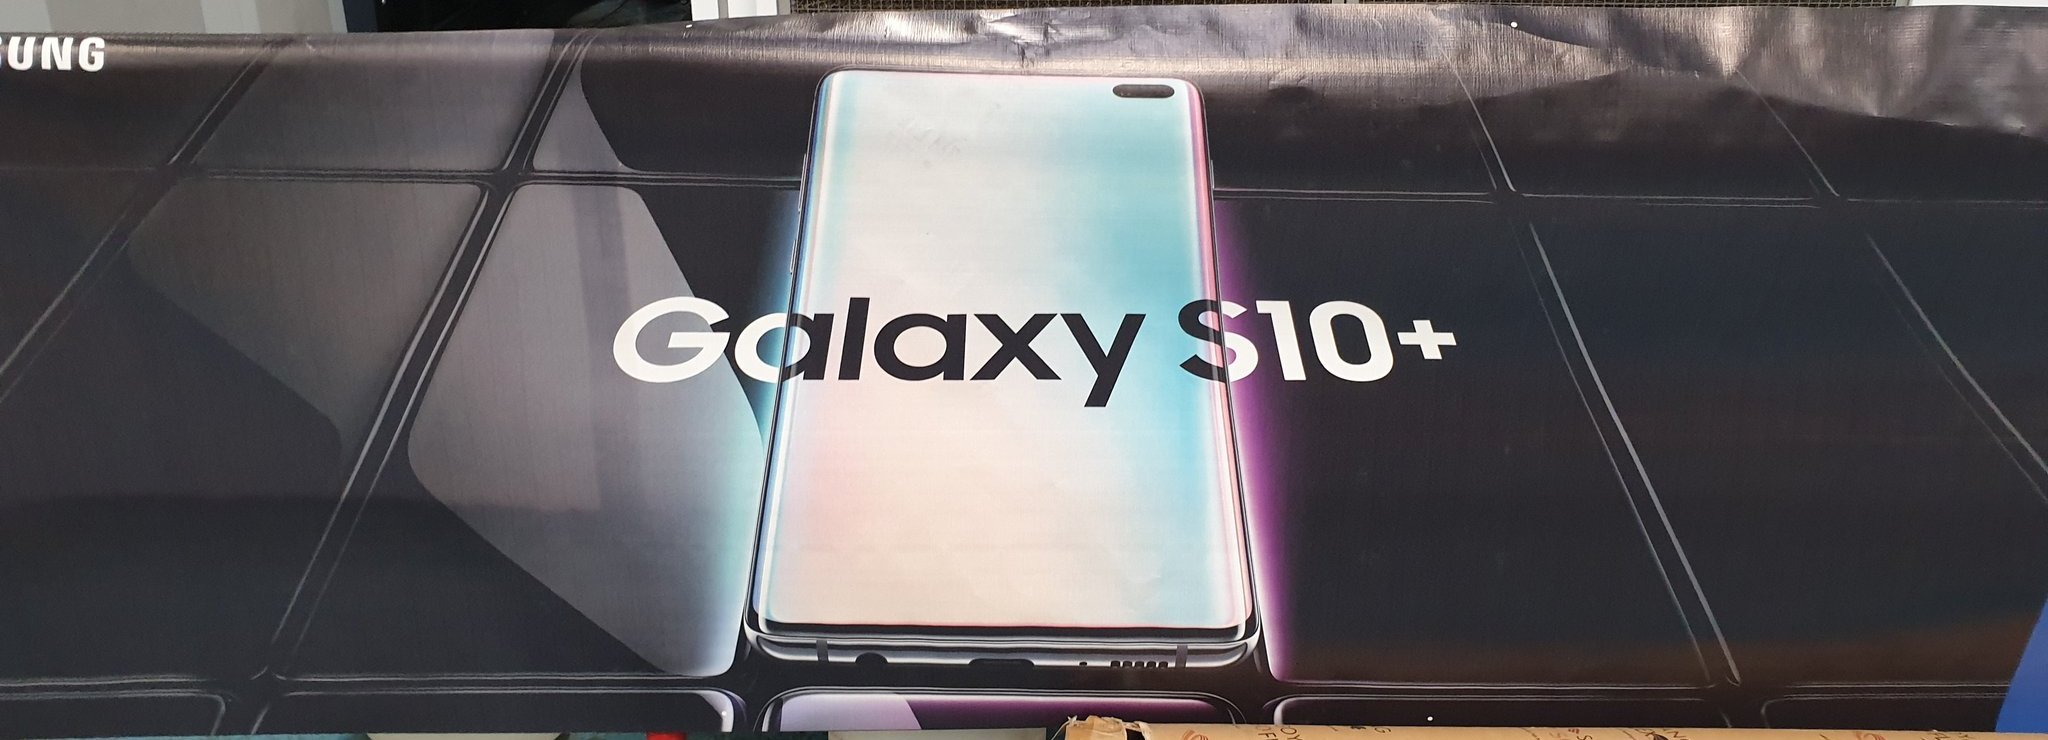 Samsung GALAXY S10 ottime novità